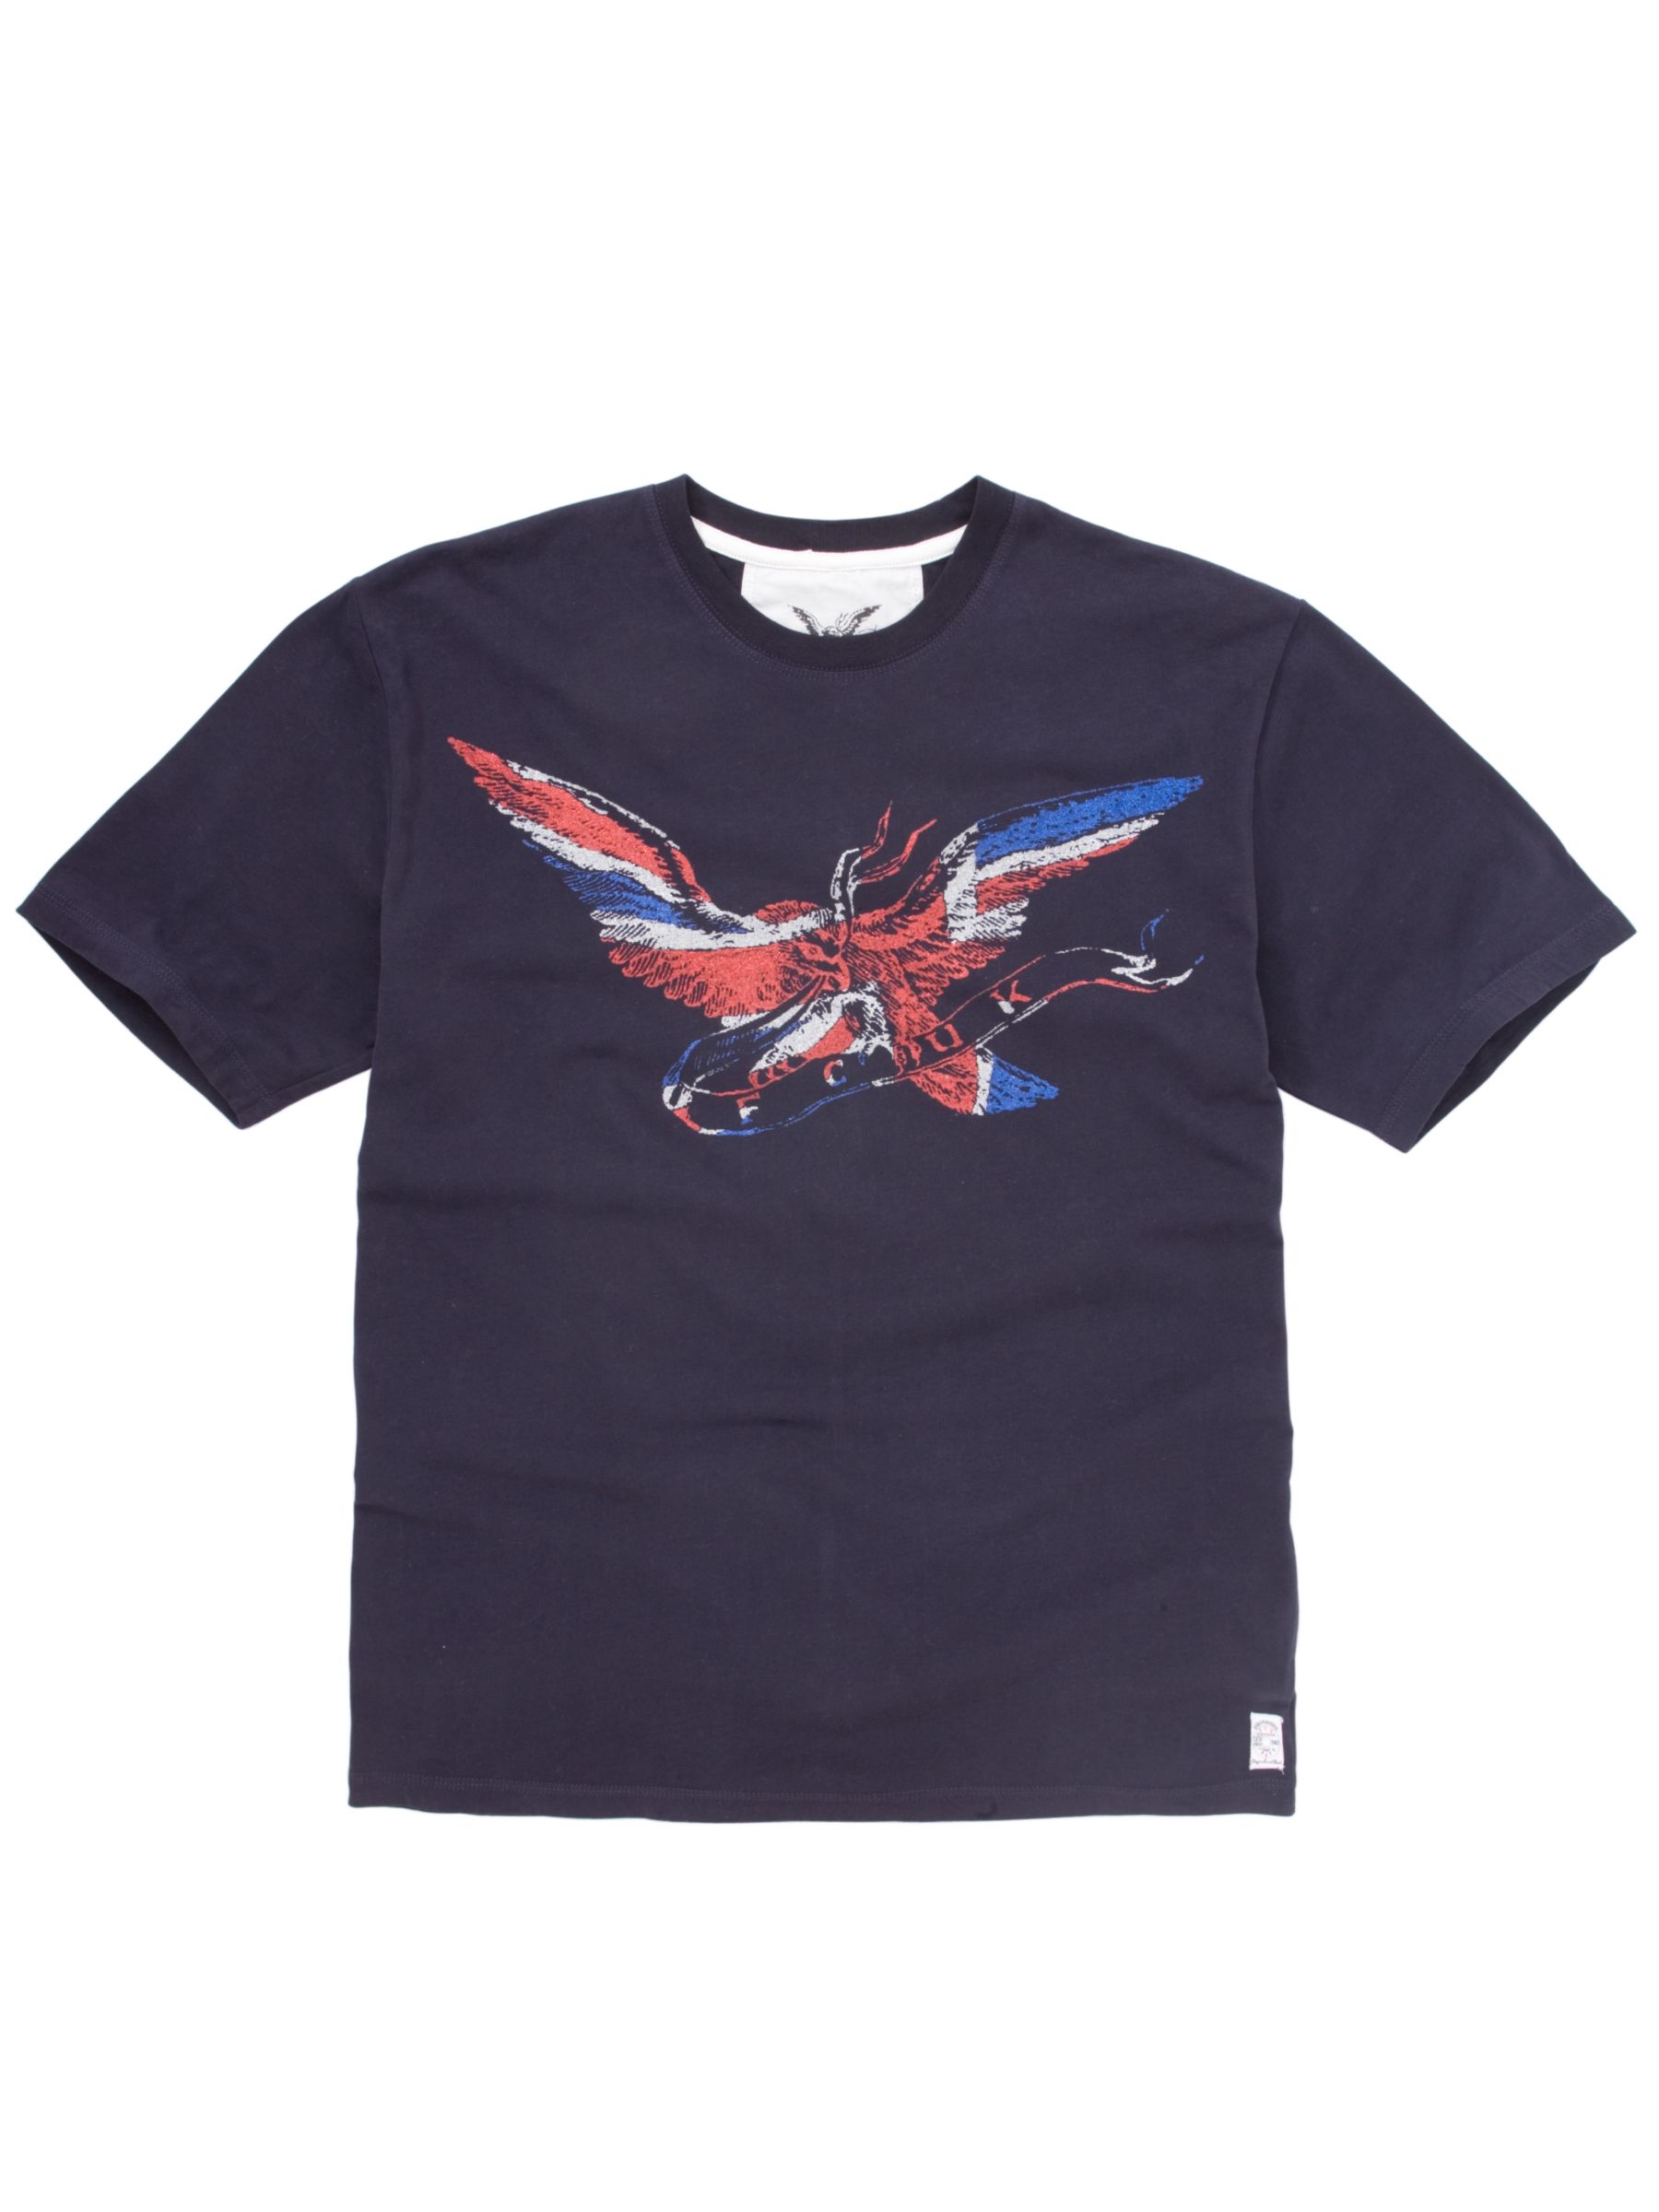 Union Eagle T-Shirt, Navy